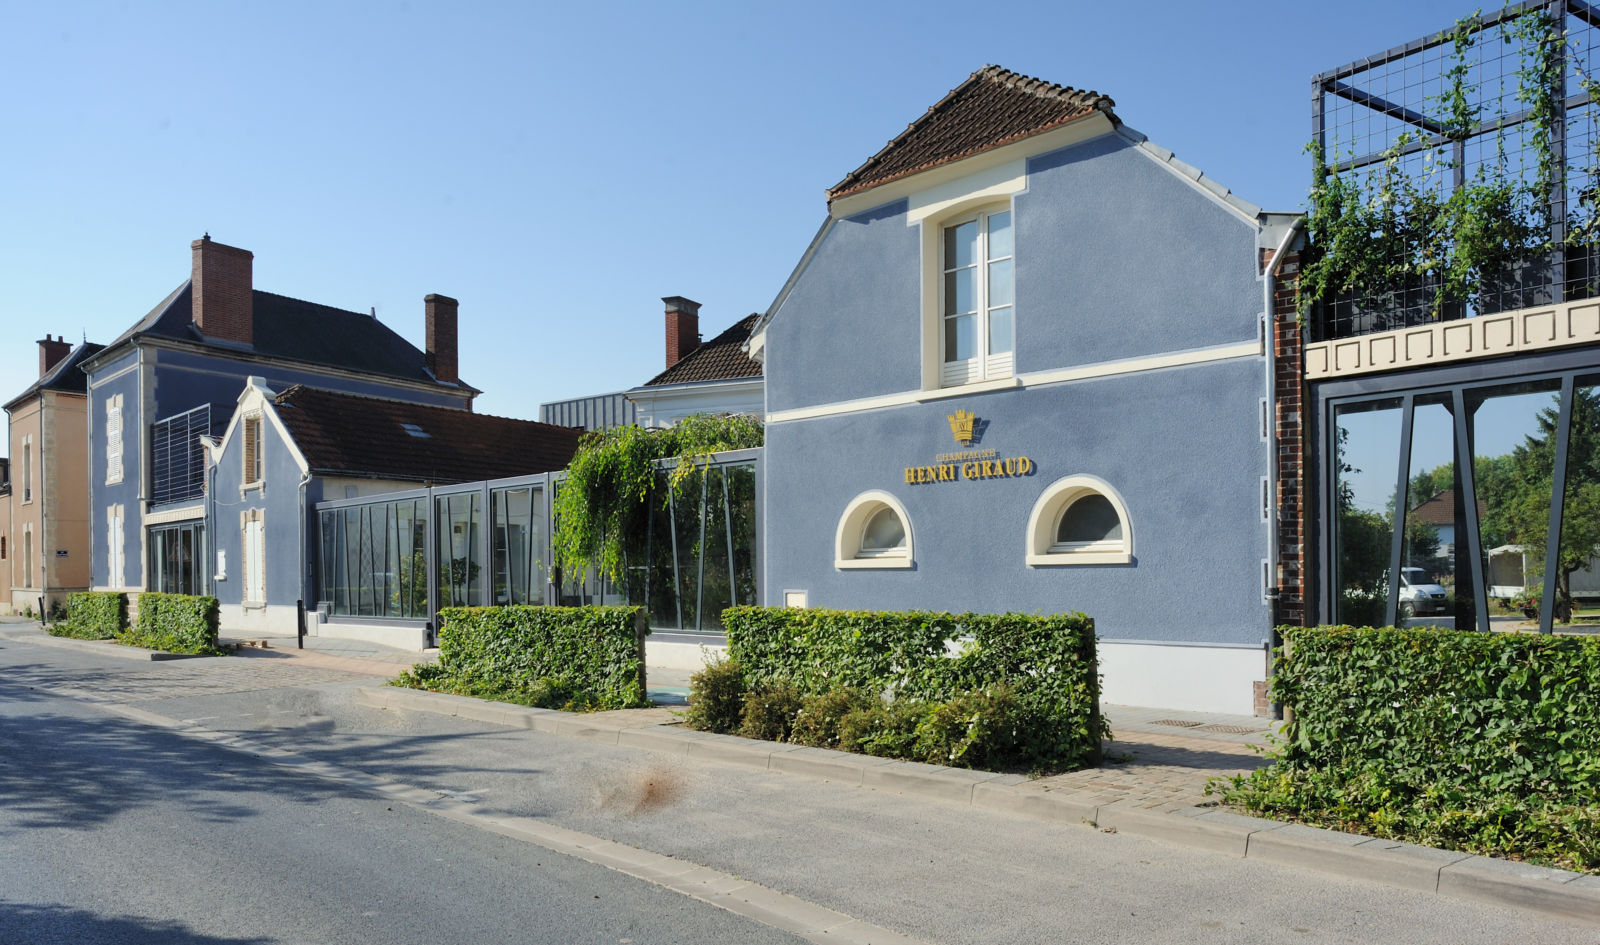 Champagne Henri Giraud facade